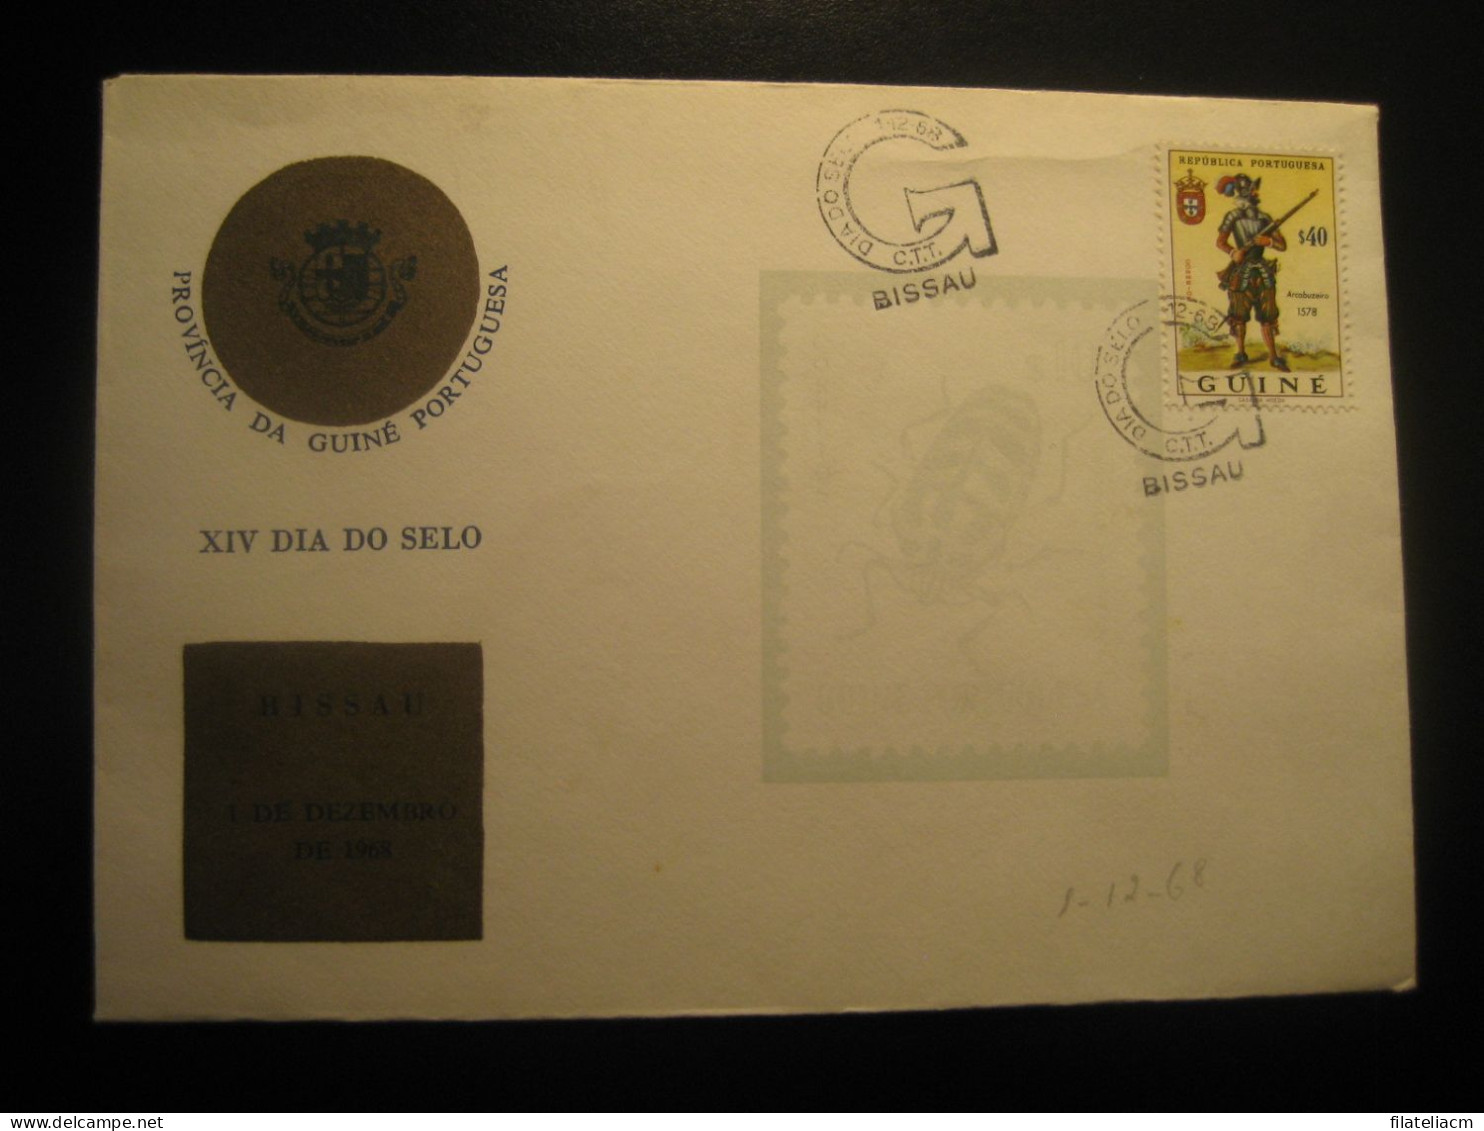 BISSAU 1968 Arcabuzeiro Stamp Dia Do Selo Cancel Cover GUINEA Portuguese Colonies Portugal Area - Portuguese Guinea